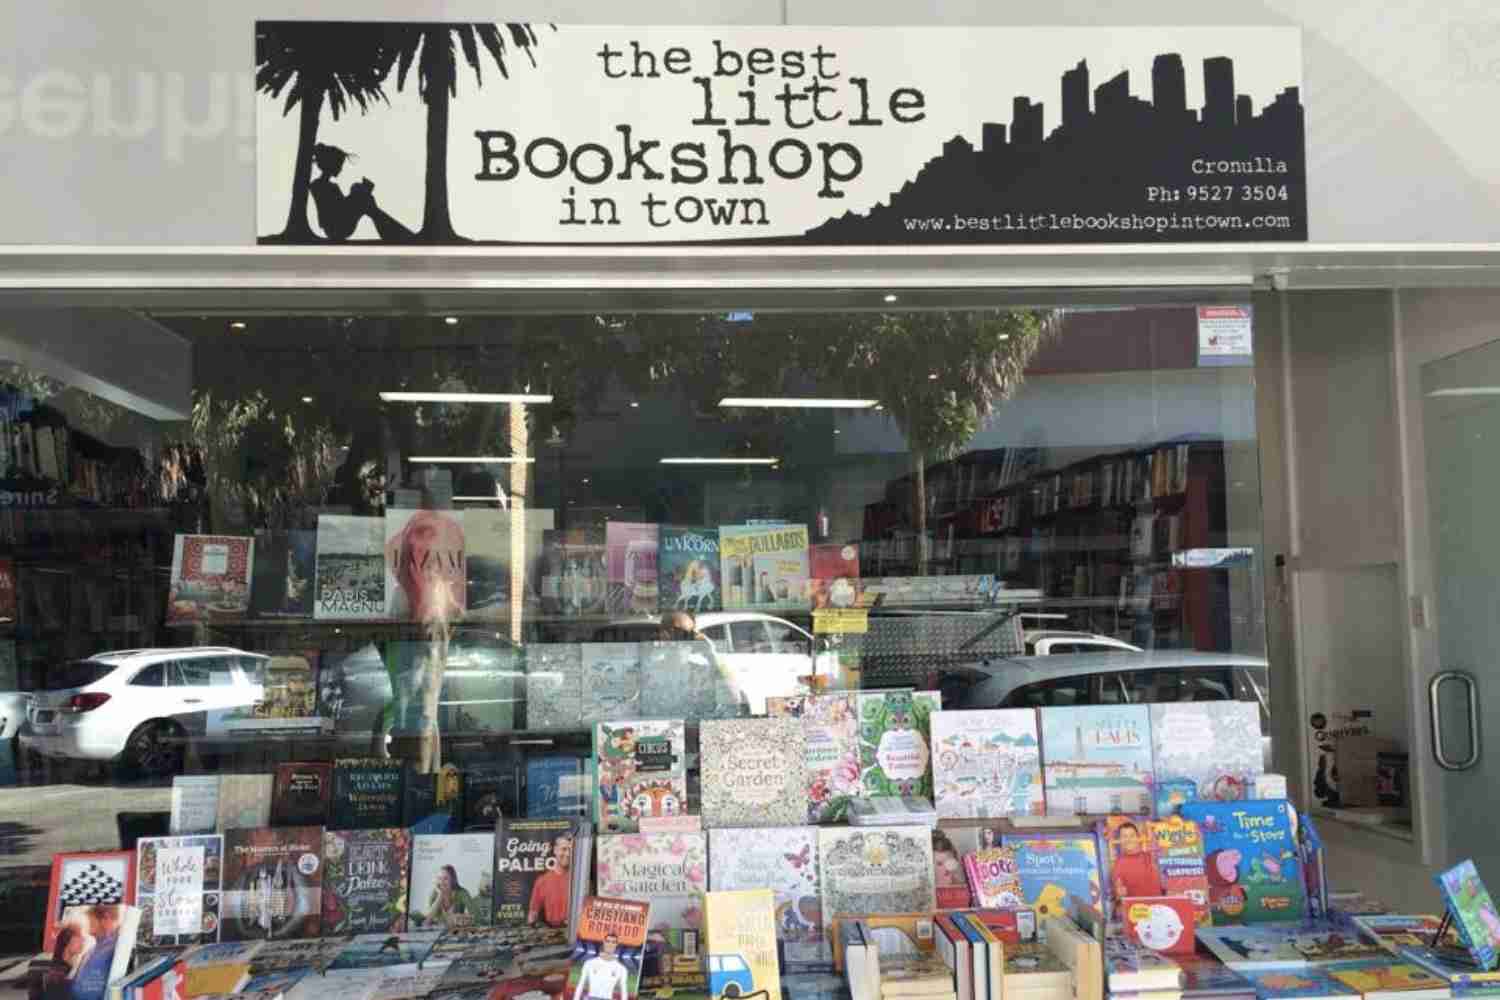 The Best Little Bookshop in Town